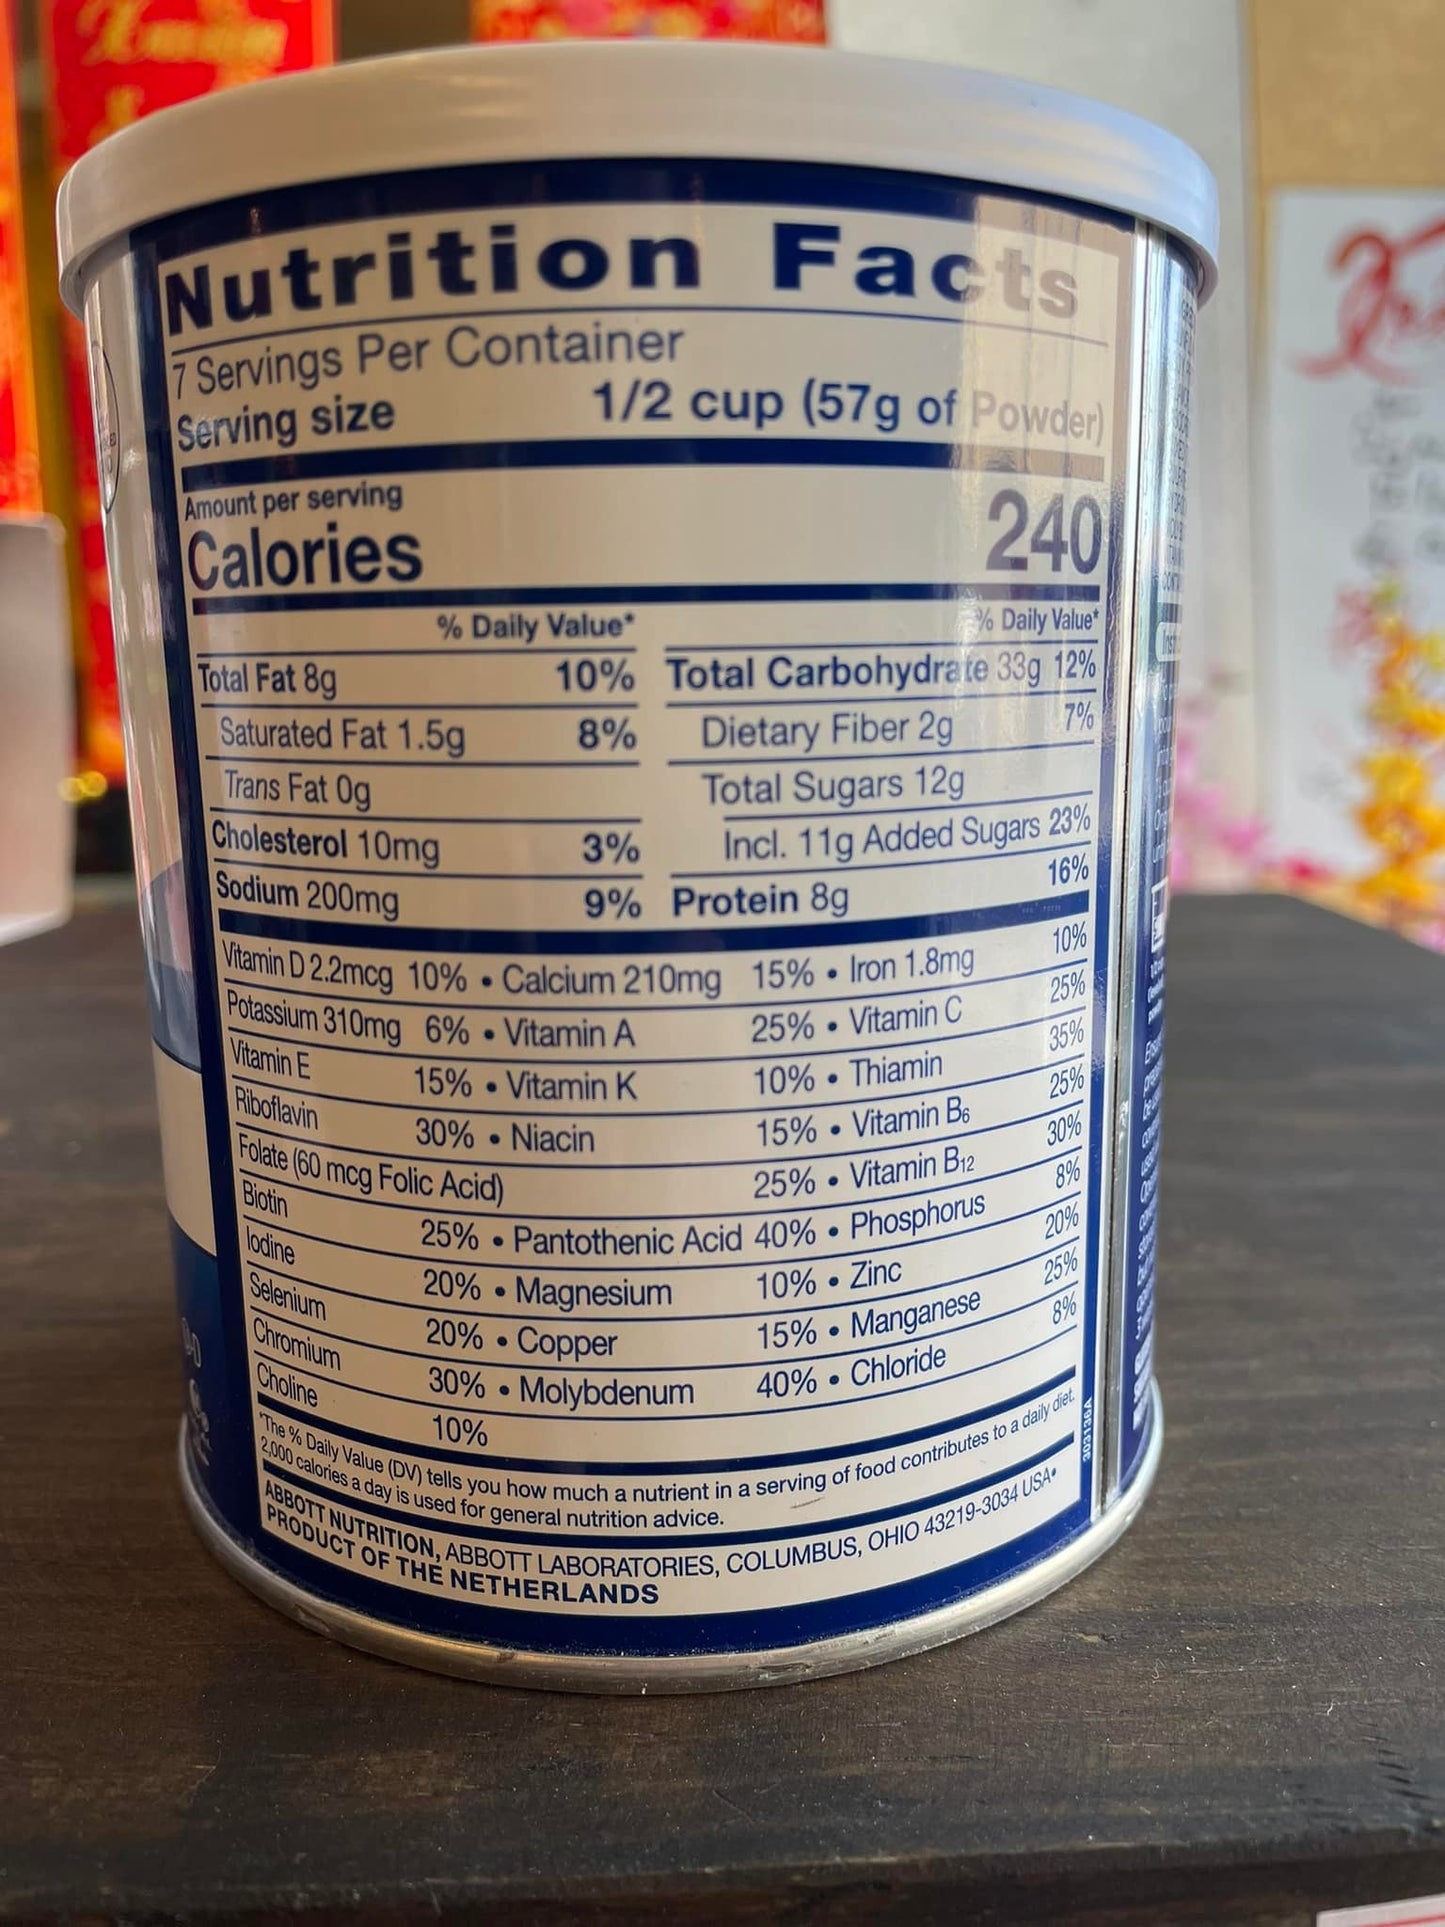 Sữa Ensure Vanilla- ENSURE Original Nutrition Powder (6x400g)